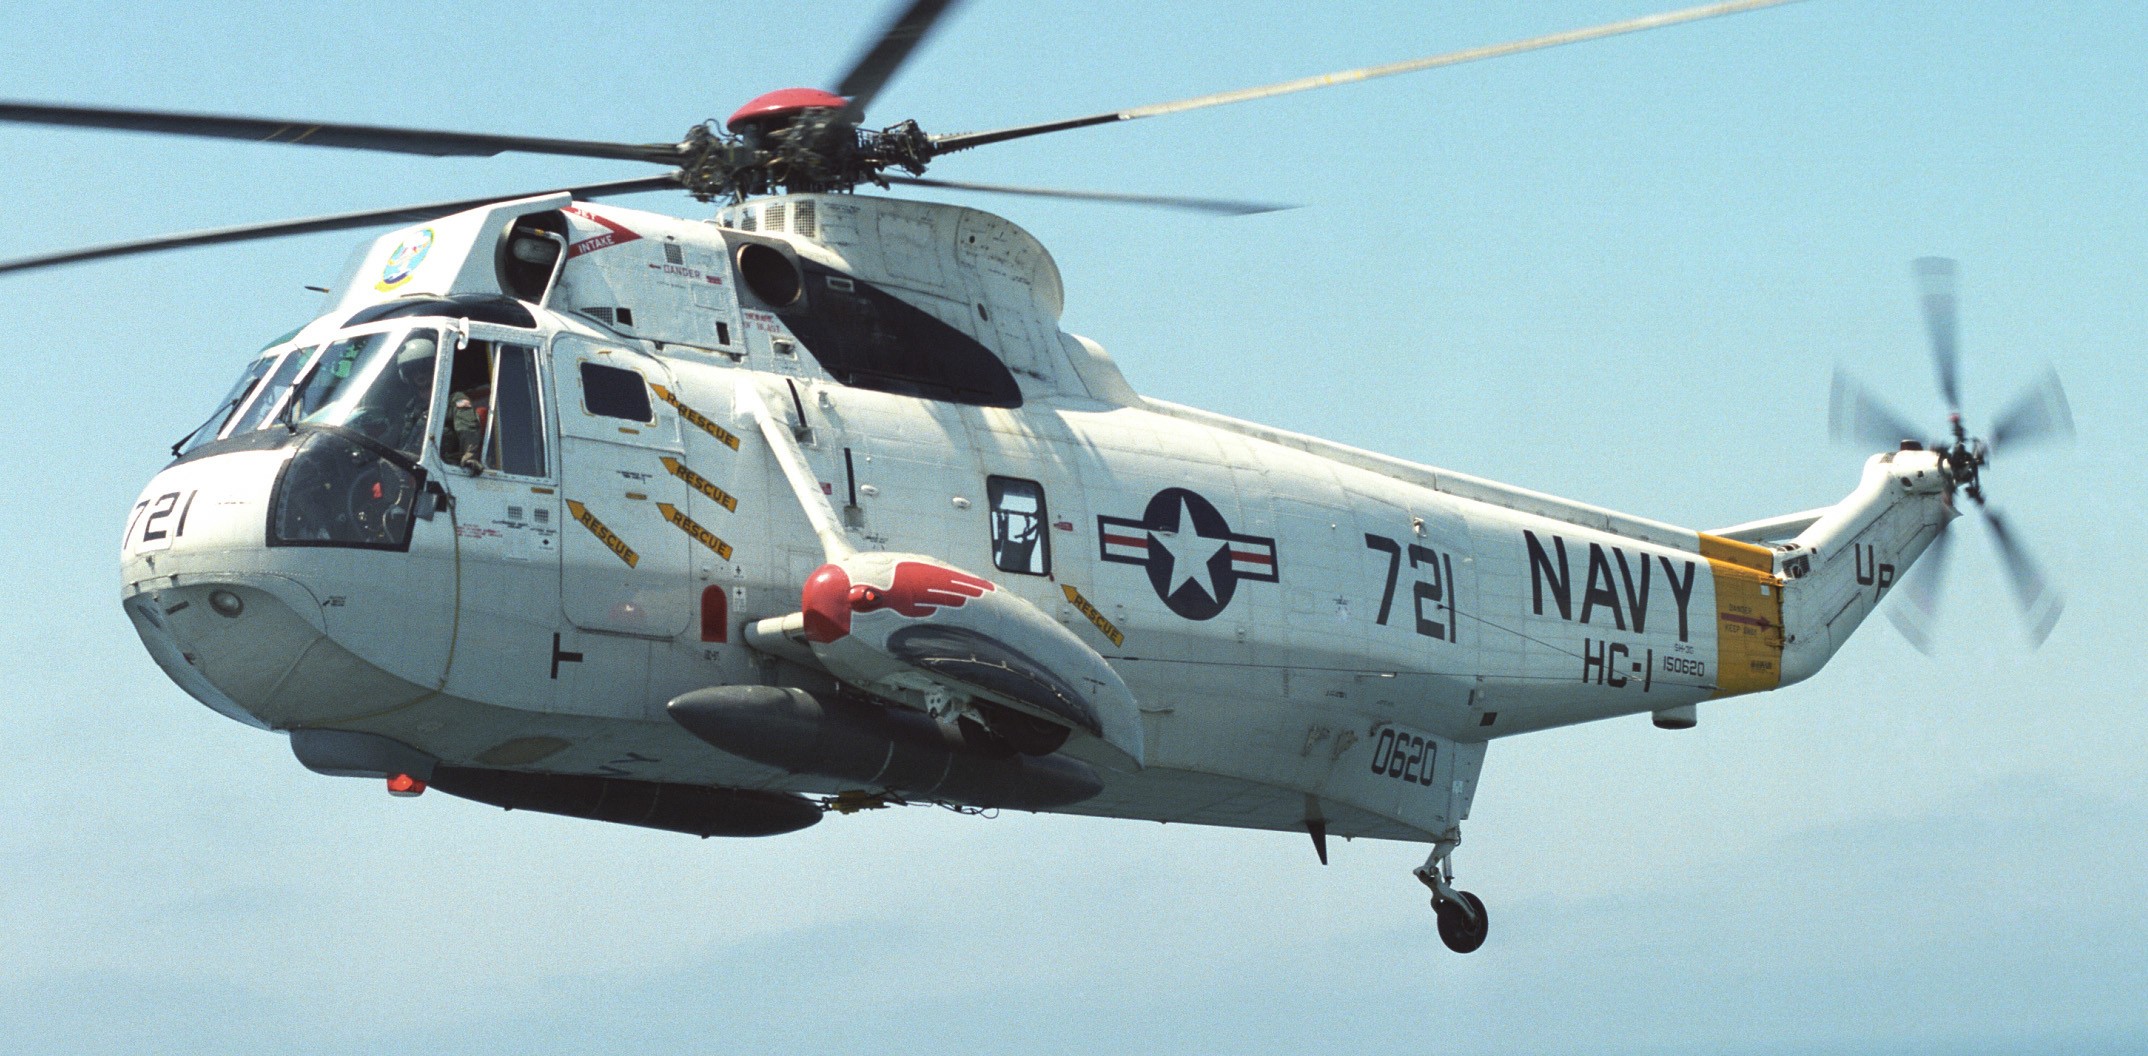 hc-1 pacific fleet angels helicopter combat support squadron sea king super stallion seasprite 08x